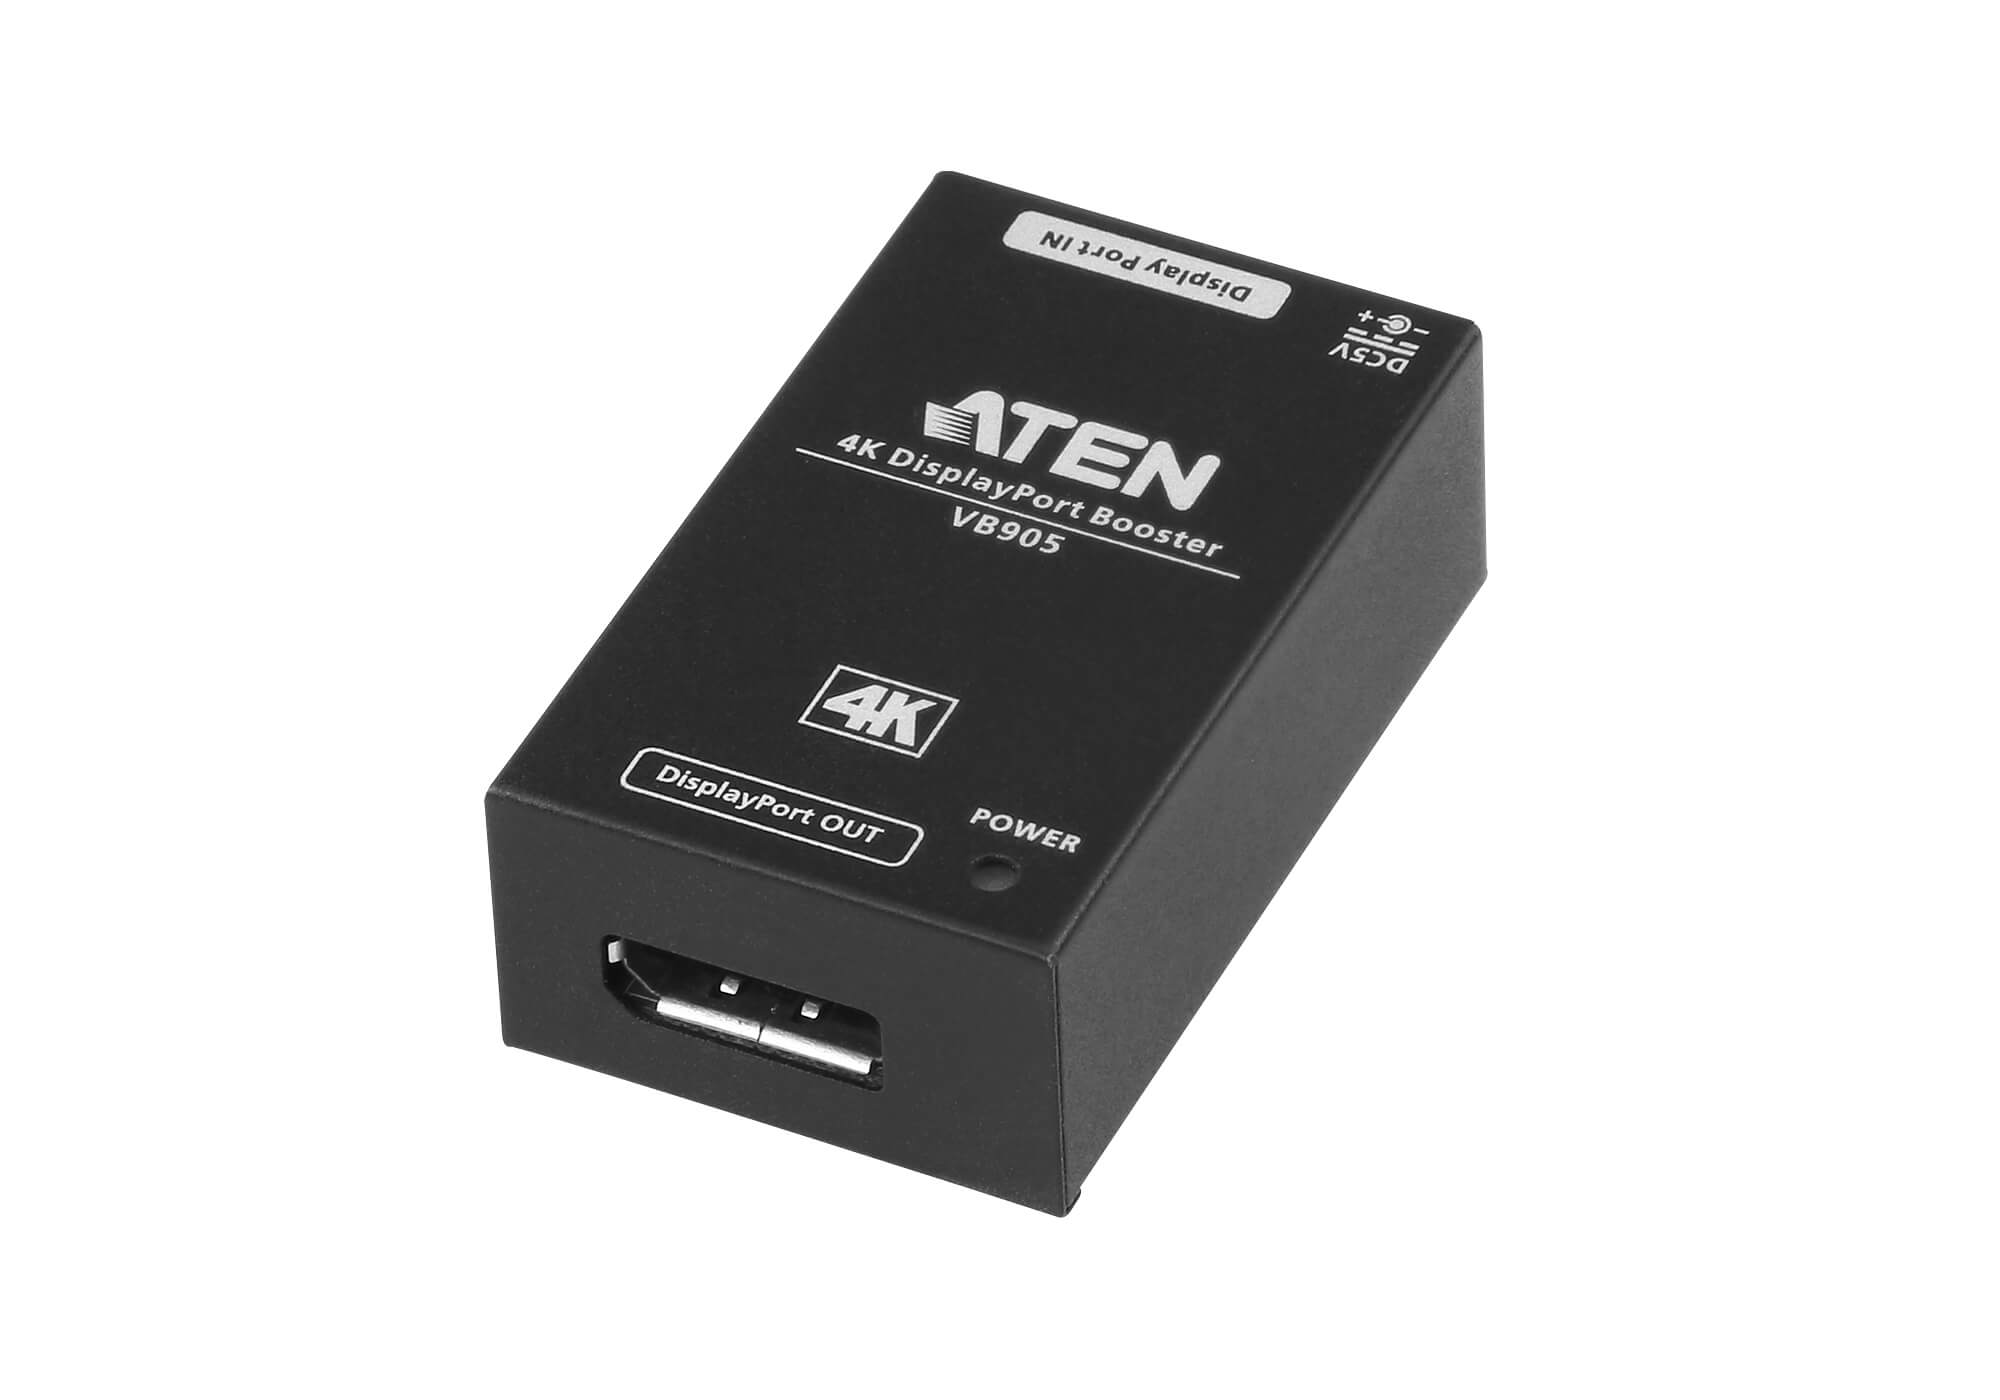 Aten VB905 4K Displayport 1.2 Booster